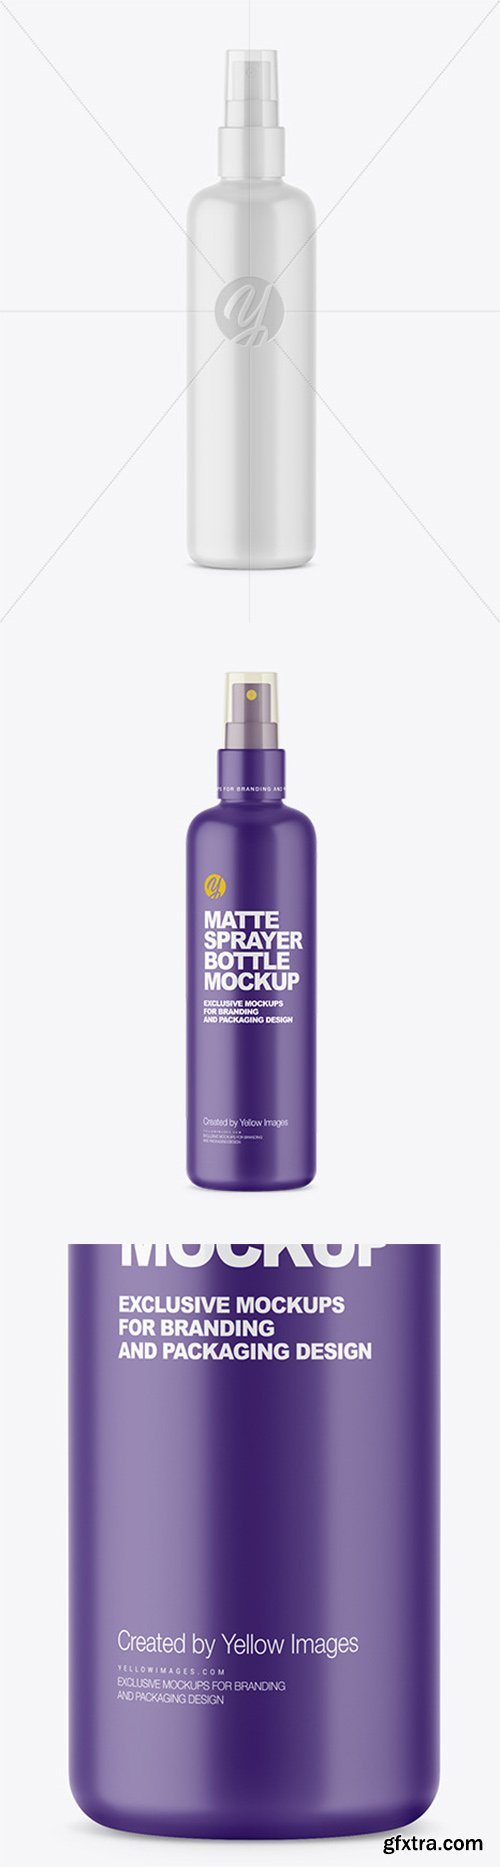 Matte Cosmetic Sprayer Bottle Mockup 55354